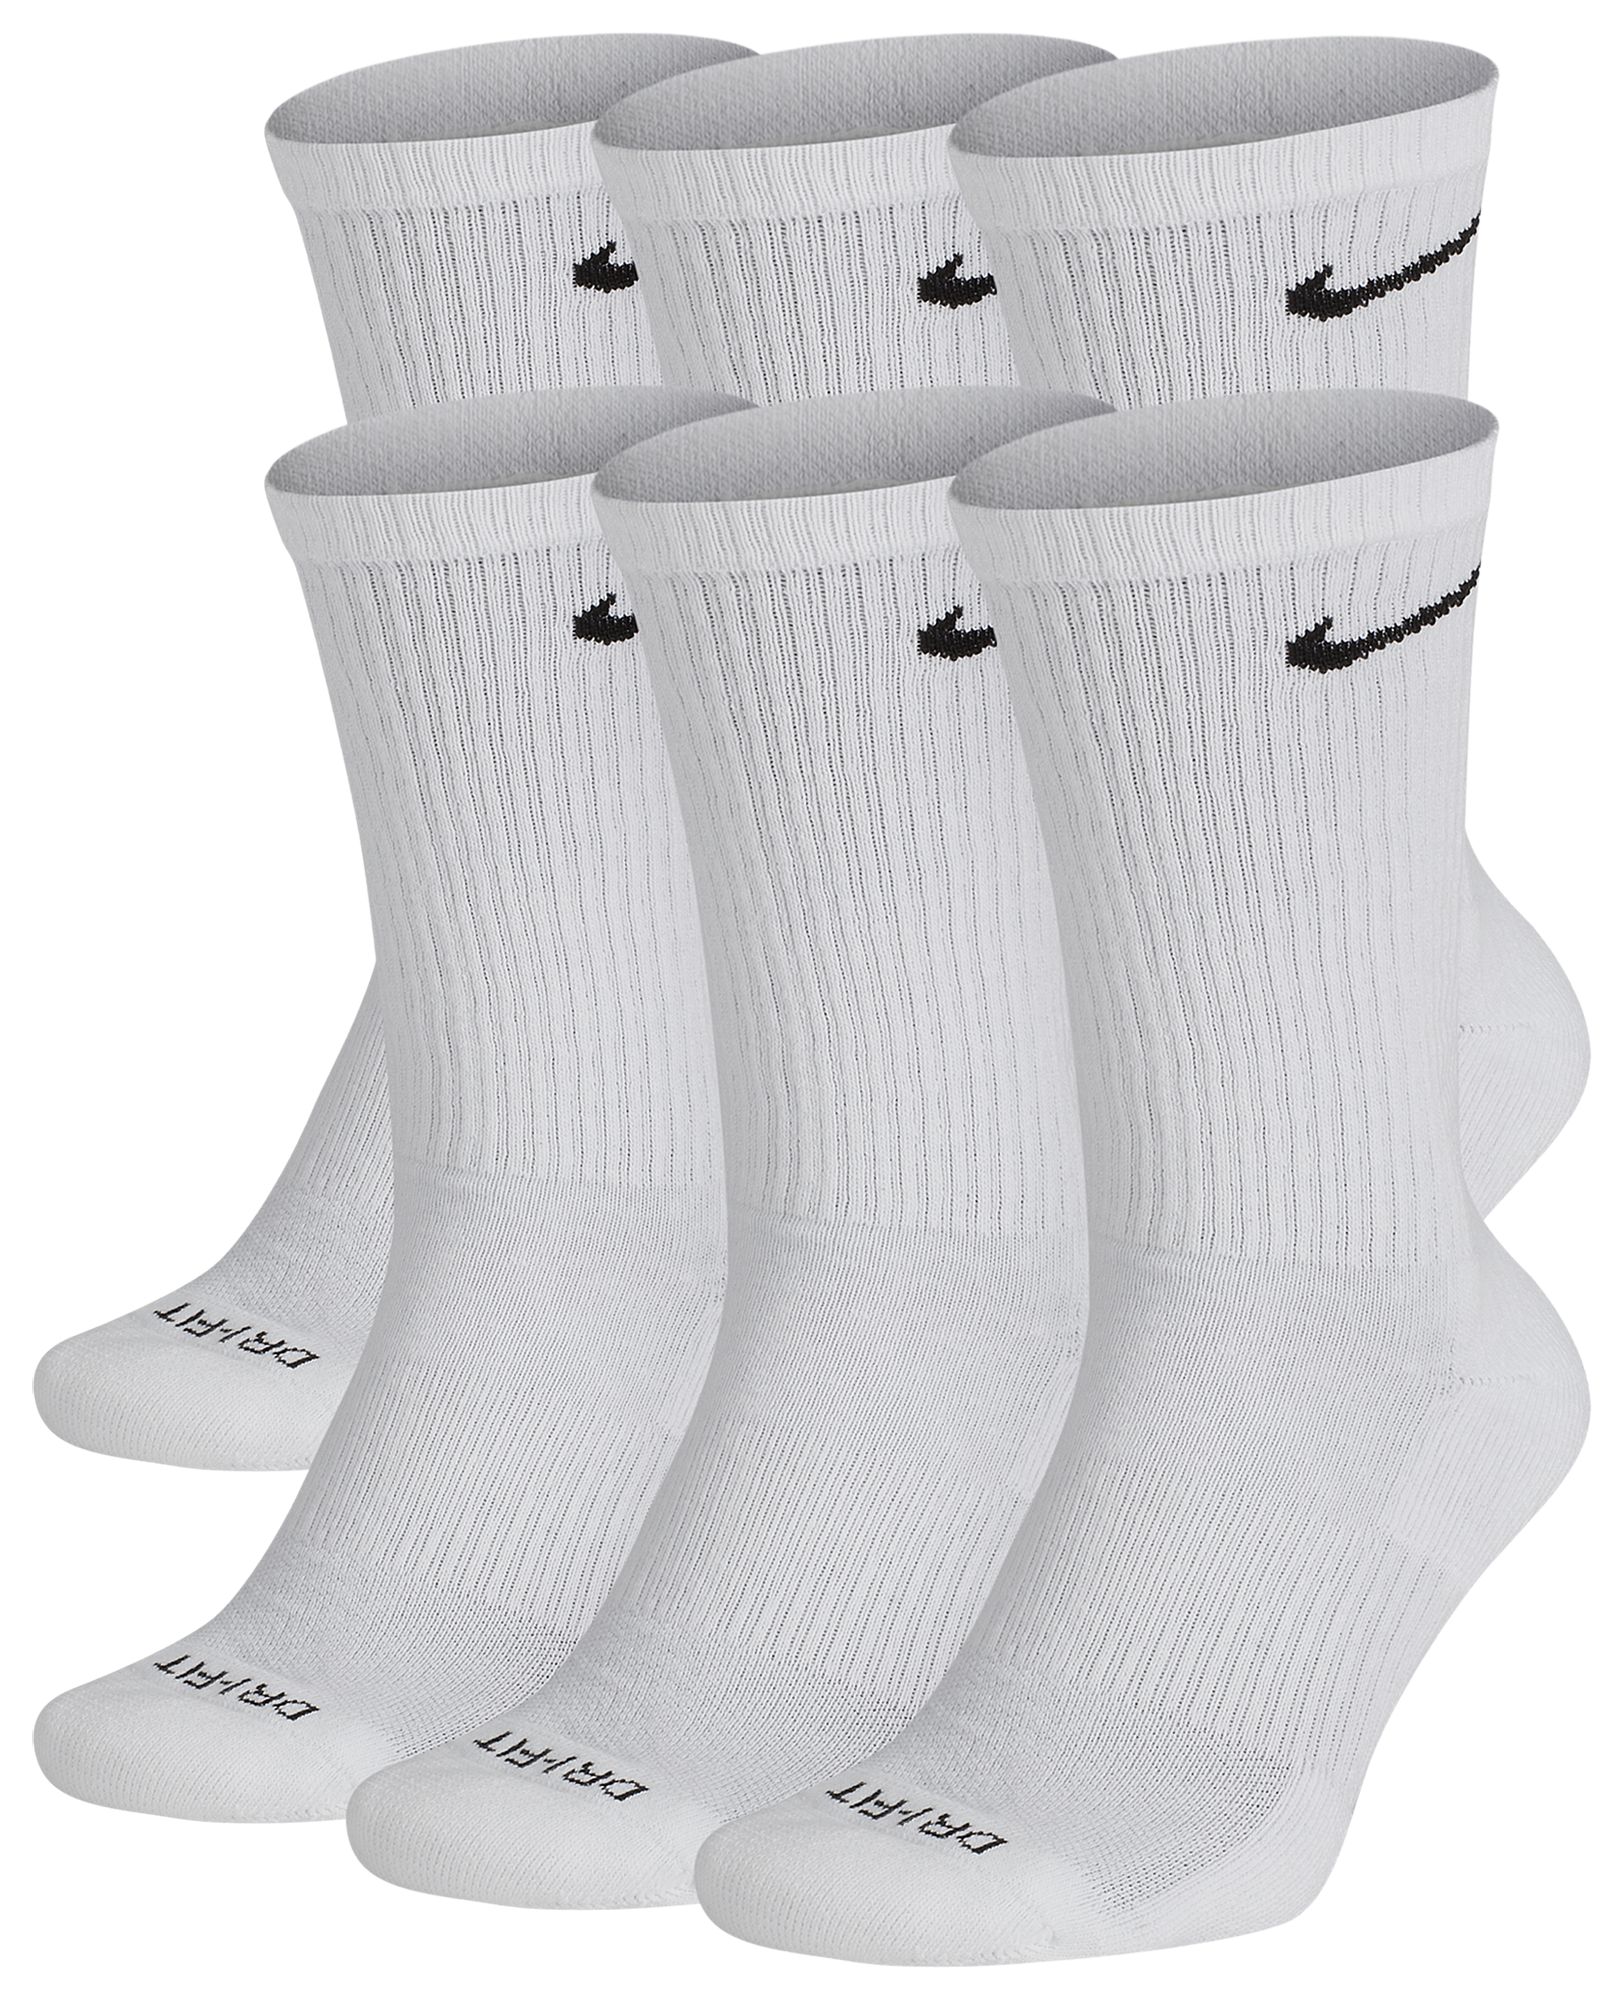 Nike 6 Pack Everyday Plus Cushioned Socks | Champs Sports Canada